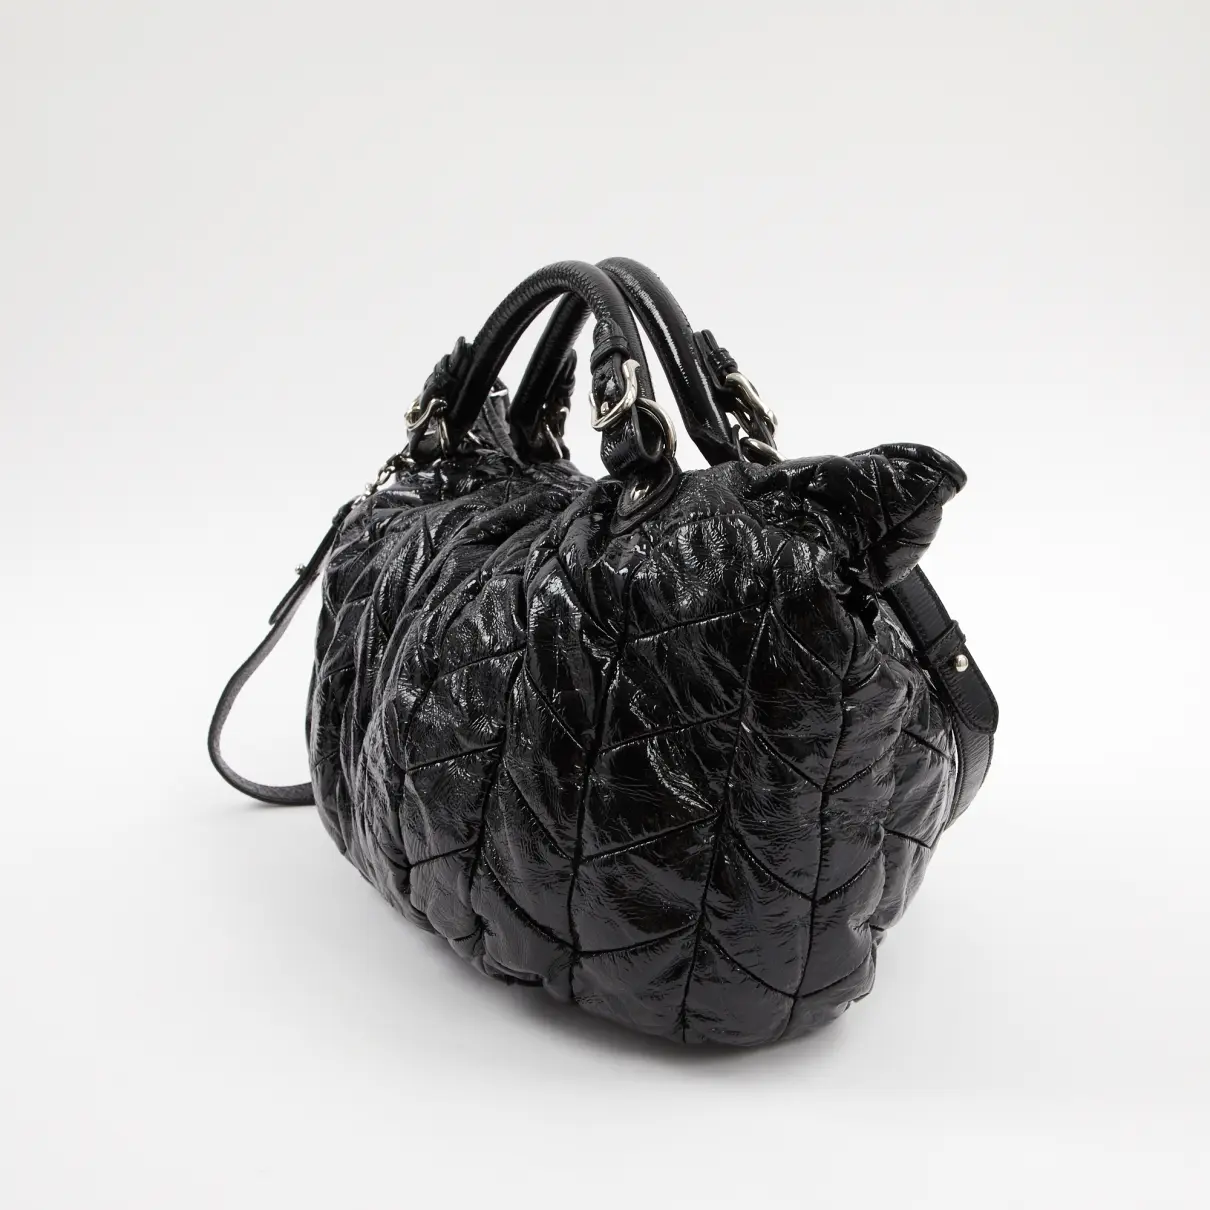 Miu Miu Patent leather handbag for sale